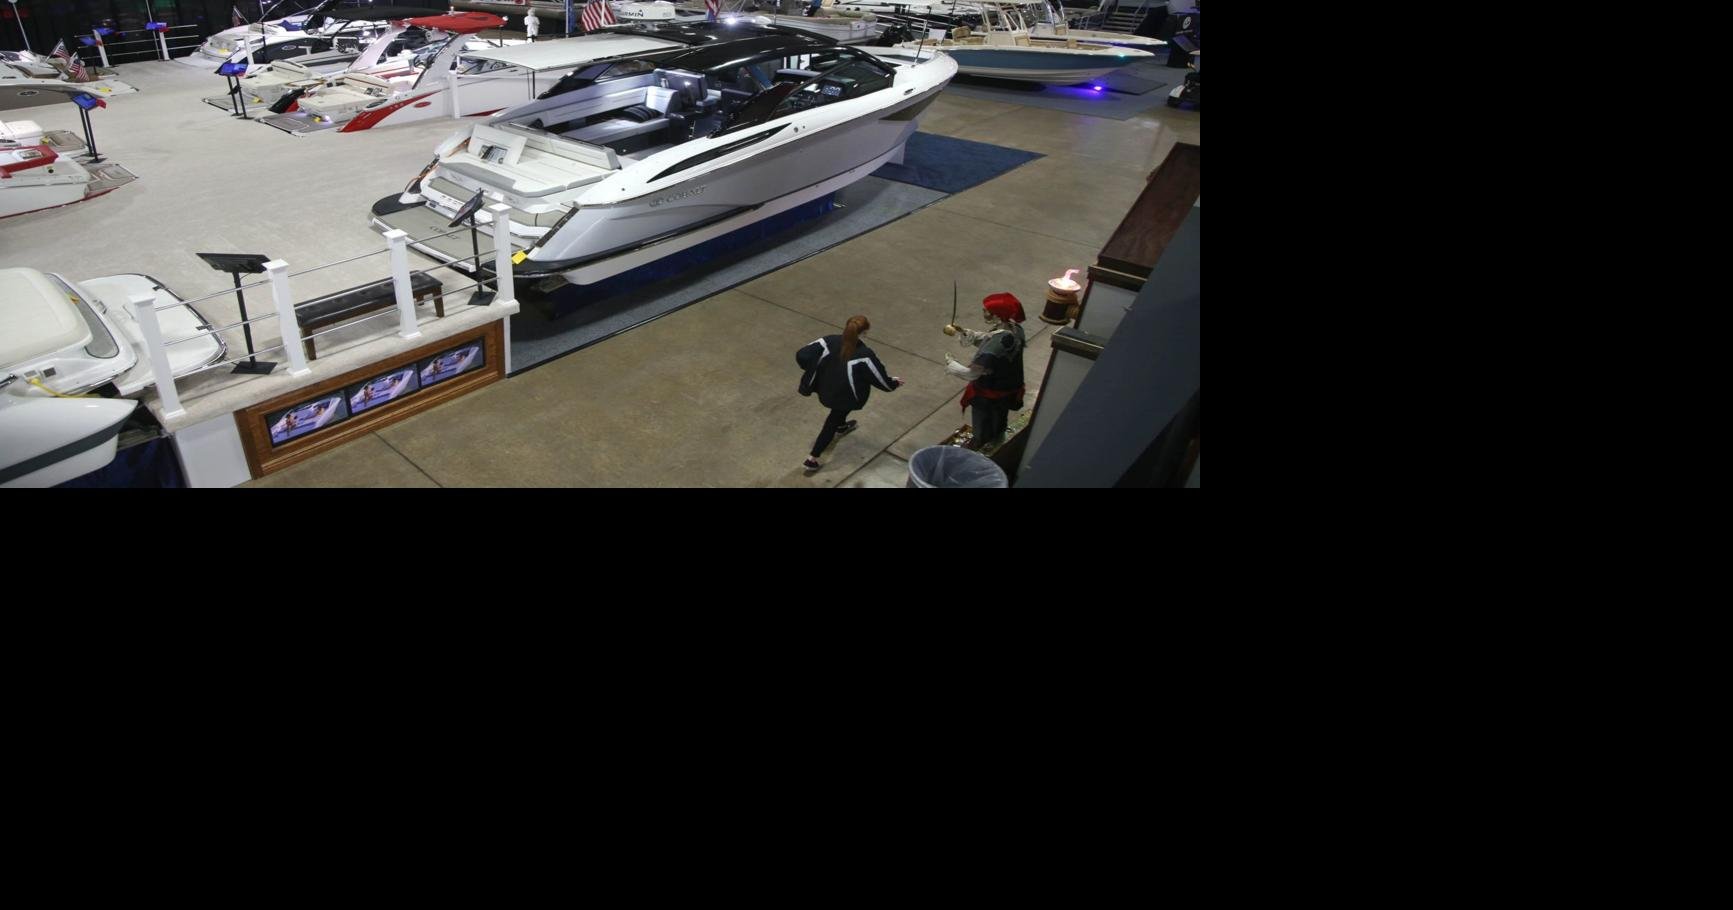 Tulsa Boat, Sport & Travel Show preparing for Feb. 1 launch